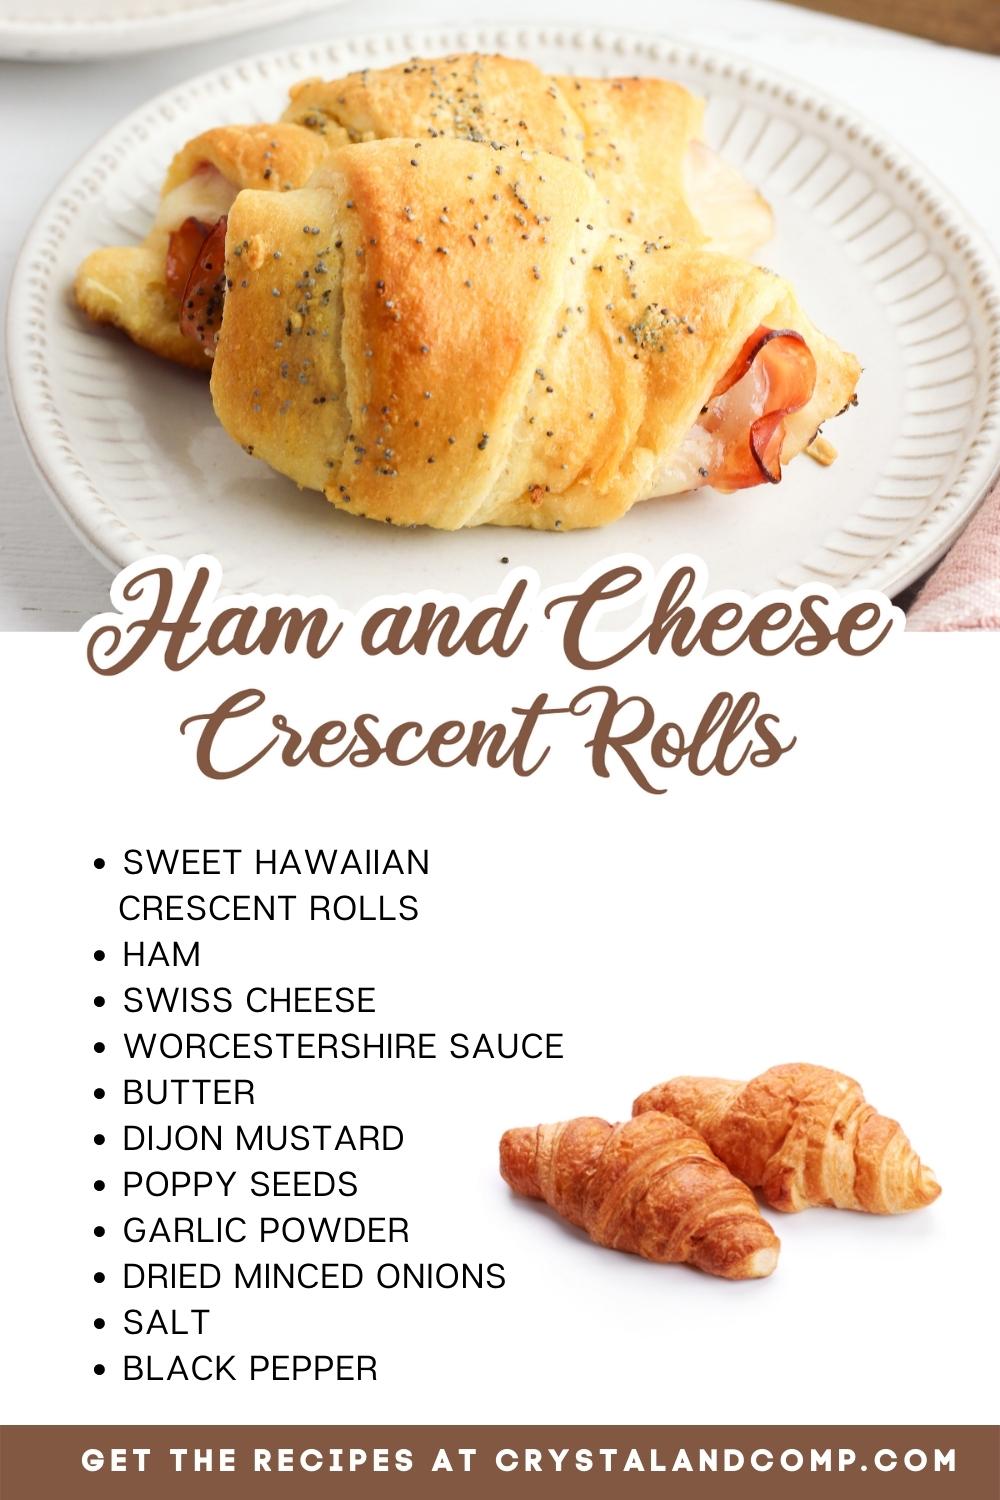 ham and cheese crescent rolls ingredient list